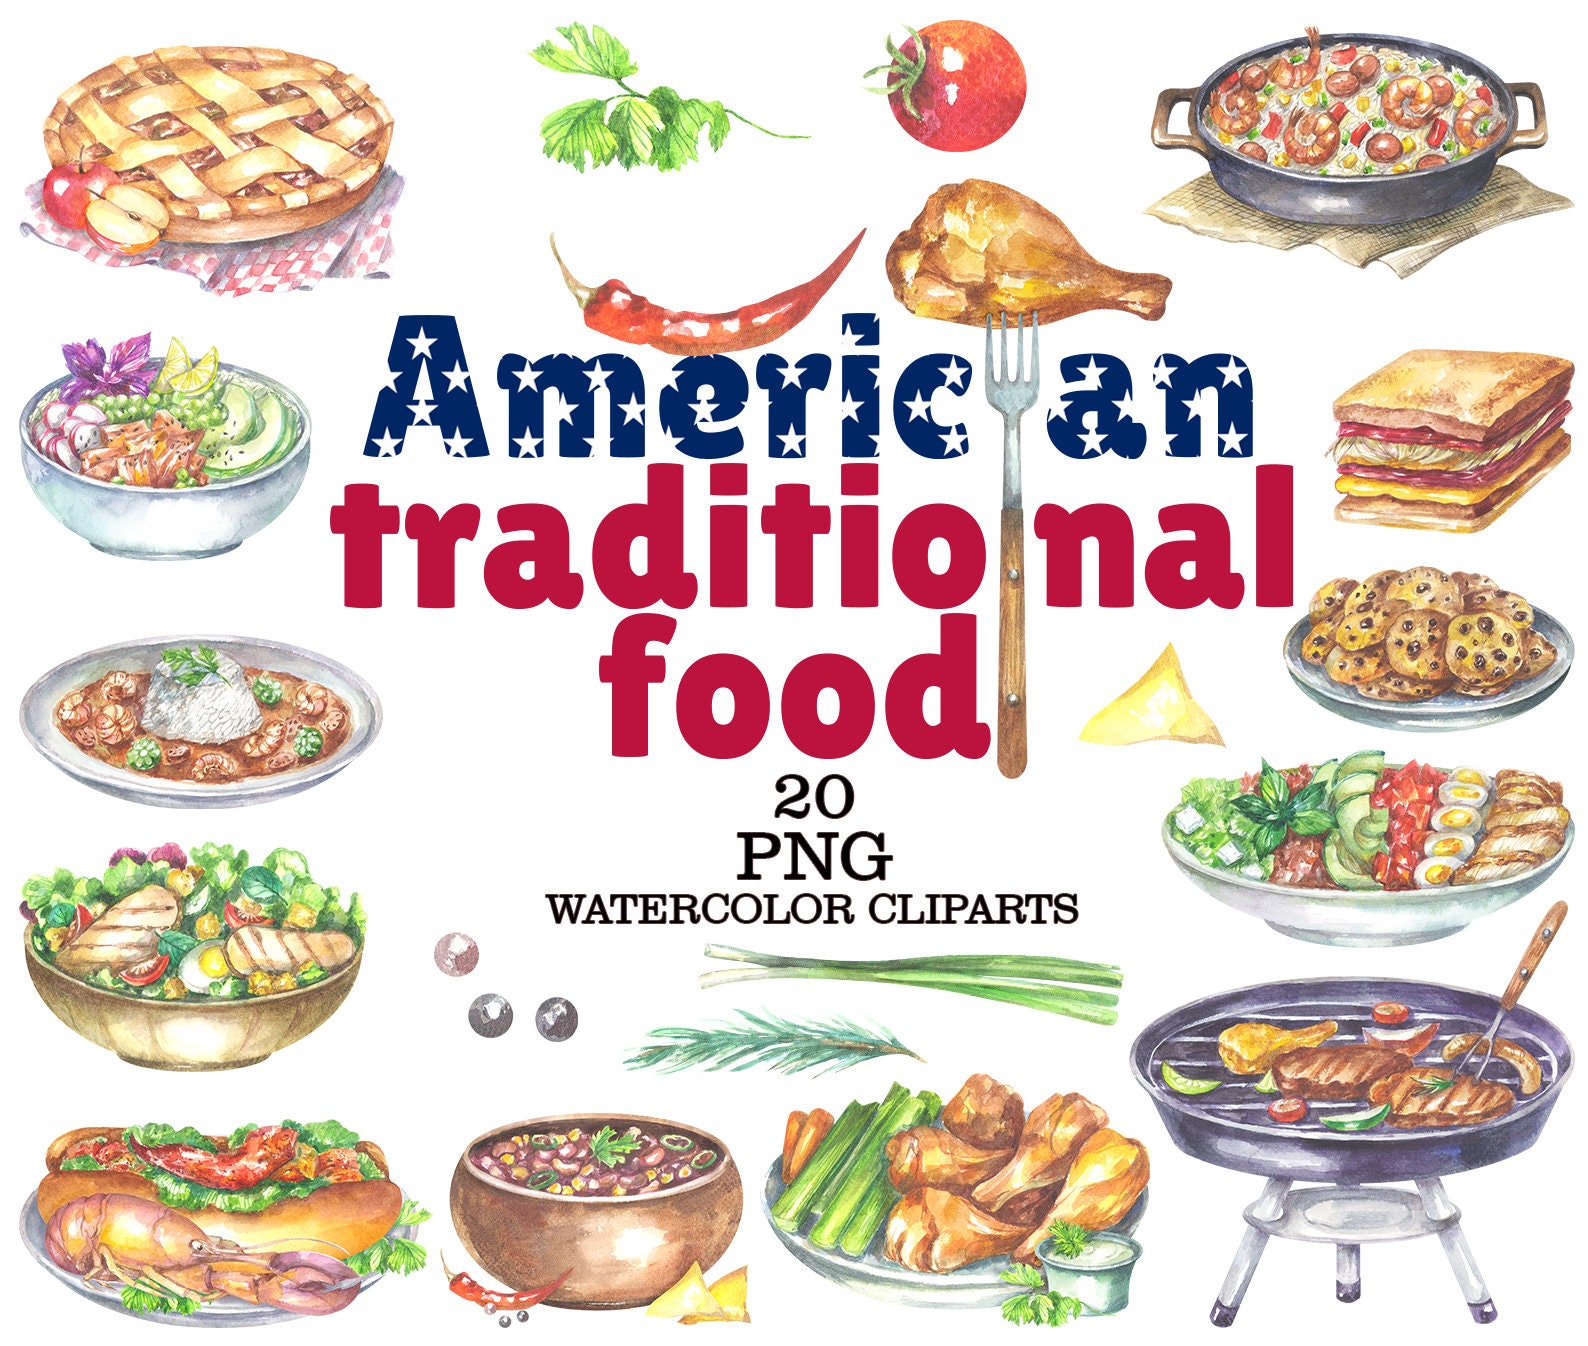 American Traditional Food Watercolor Clipart, Food Png, USA Food Clipart,  Food Illustration, Food Painting, Menu, Apple Pie, American Foods 